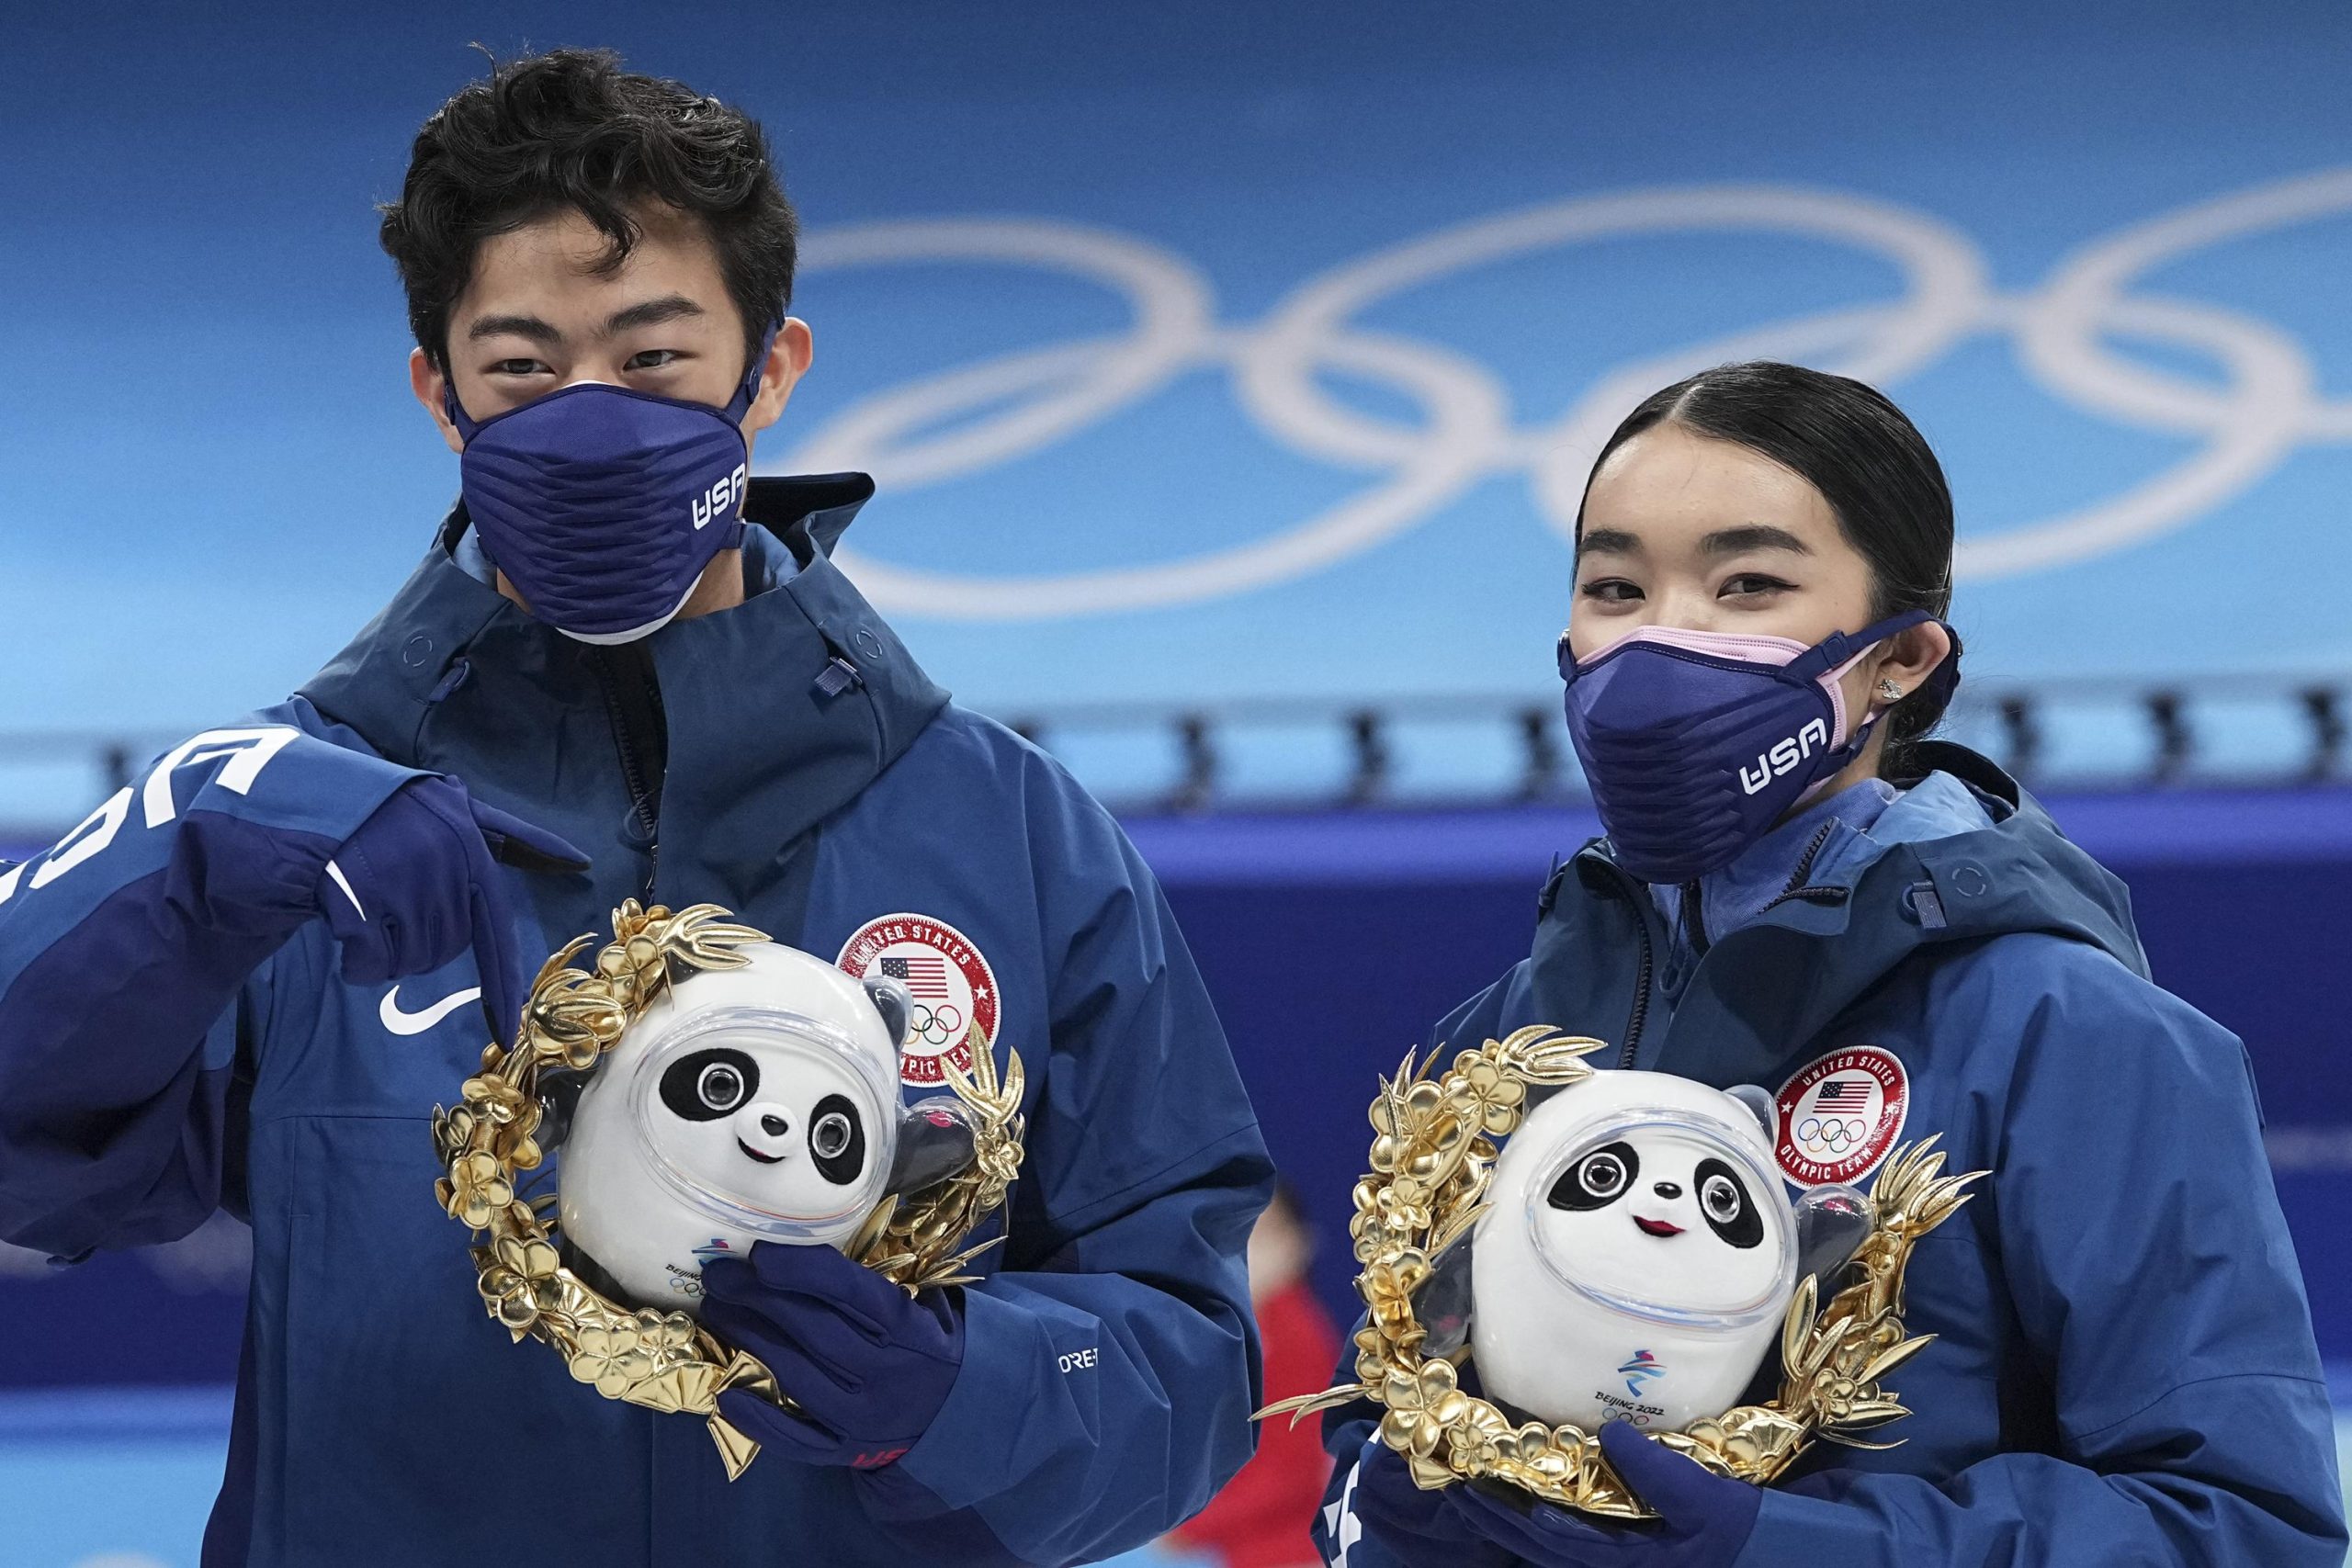 Comité niega pedido de plata a patinadores estadounidenses en Juegos Olímpicos